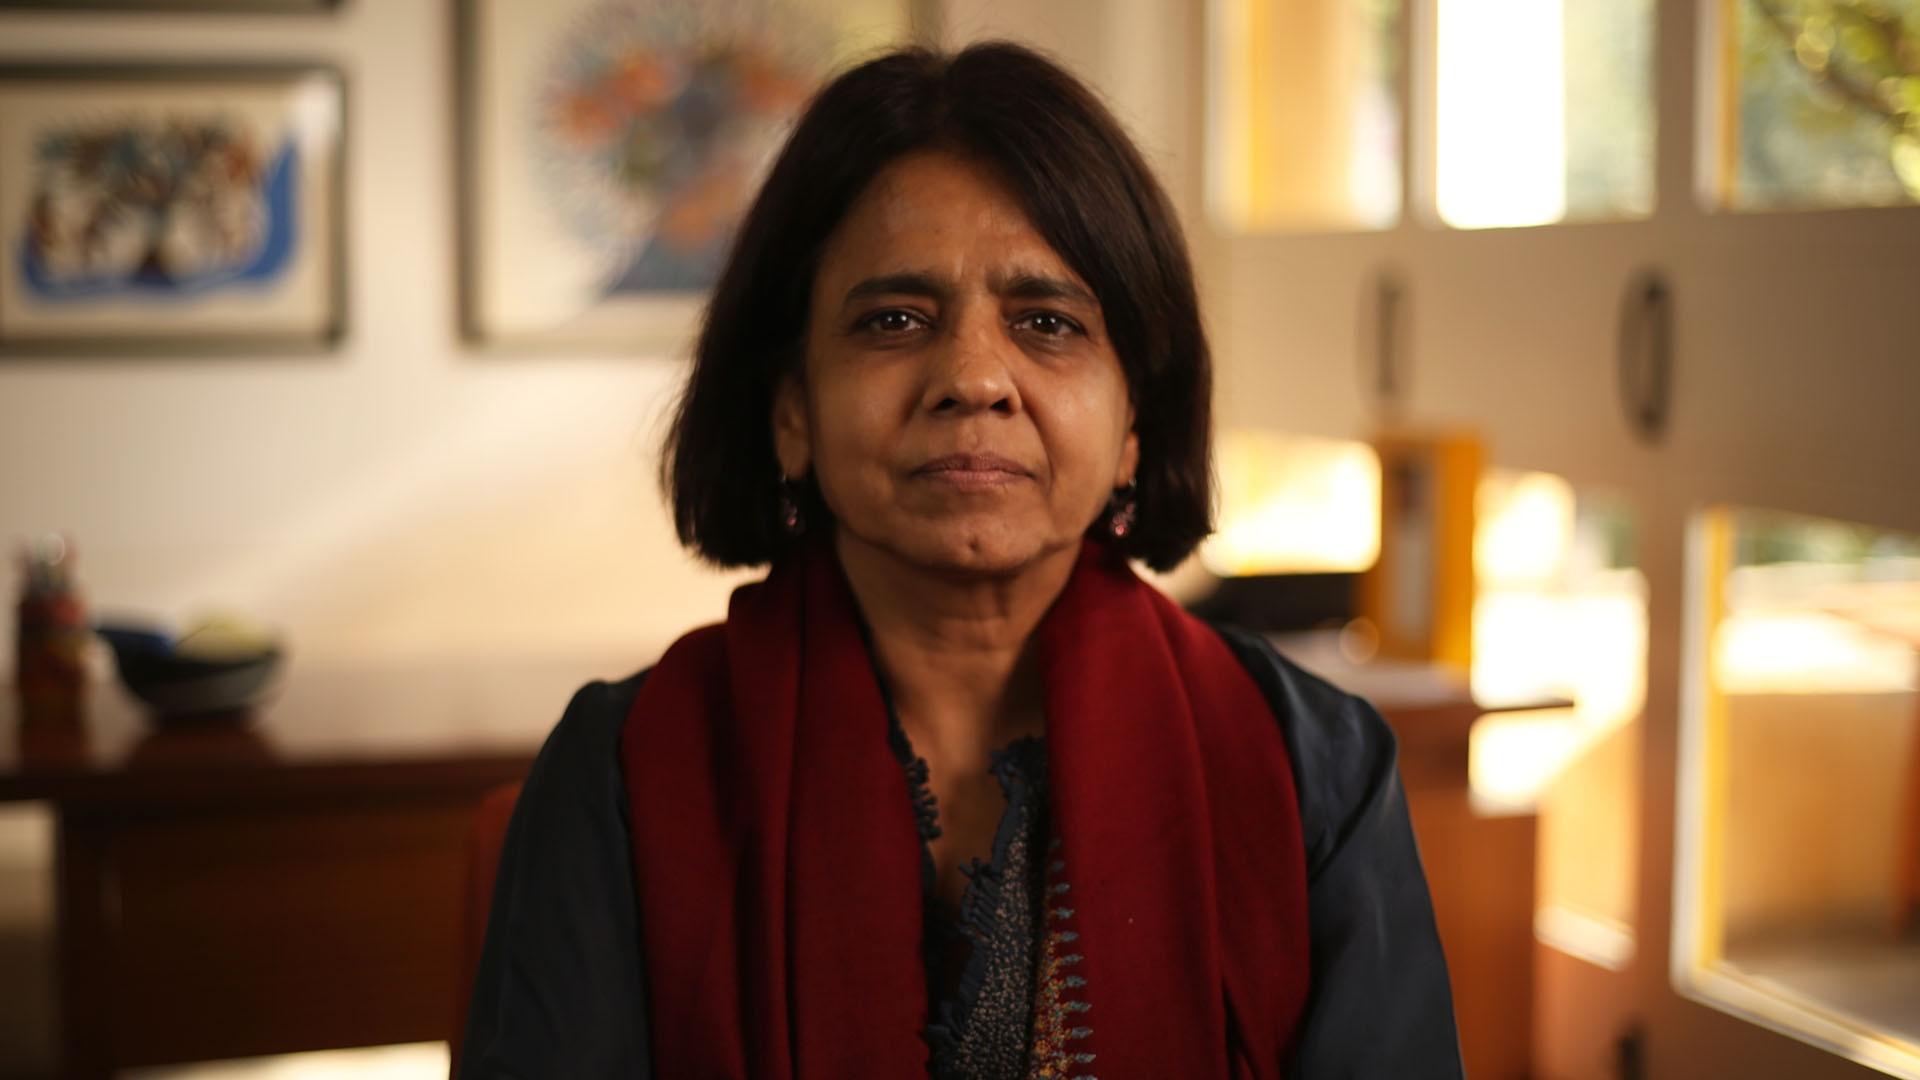 Closeup image of Sunita Narain, Director General, Center for Science and Environment, India